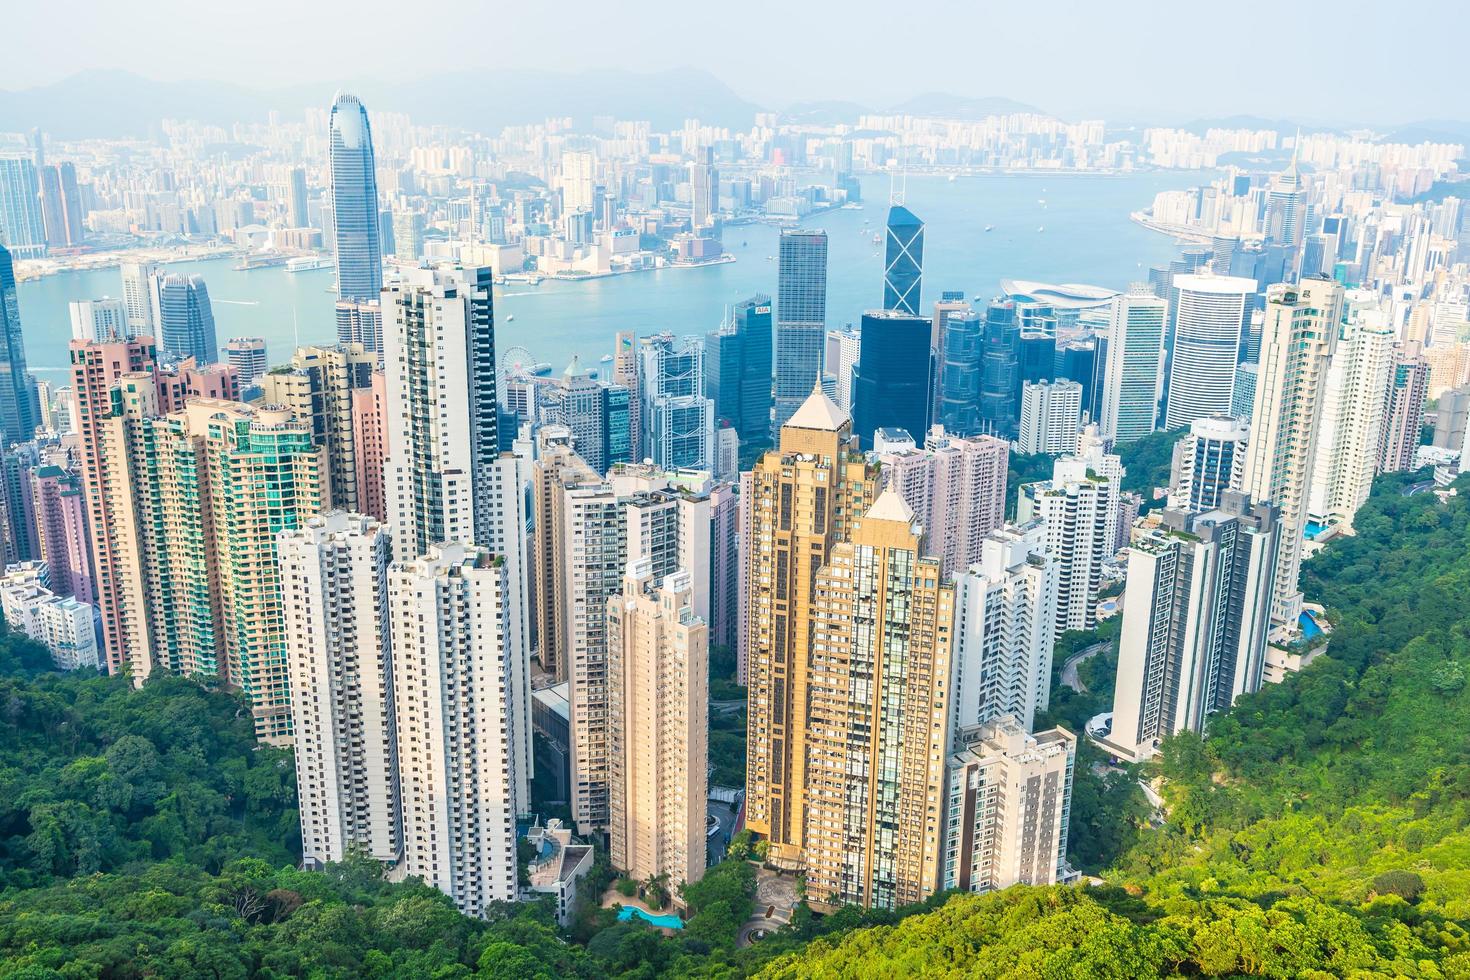 Stadtbild von Hong Kong City, China foto